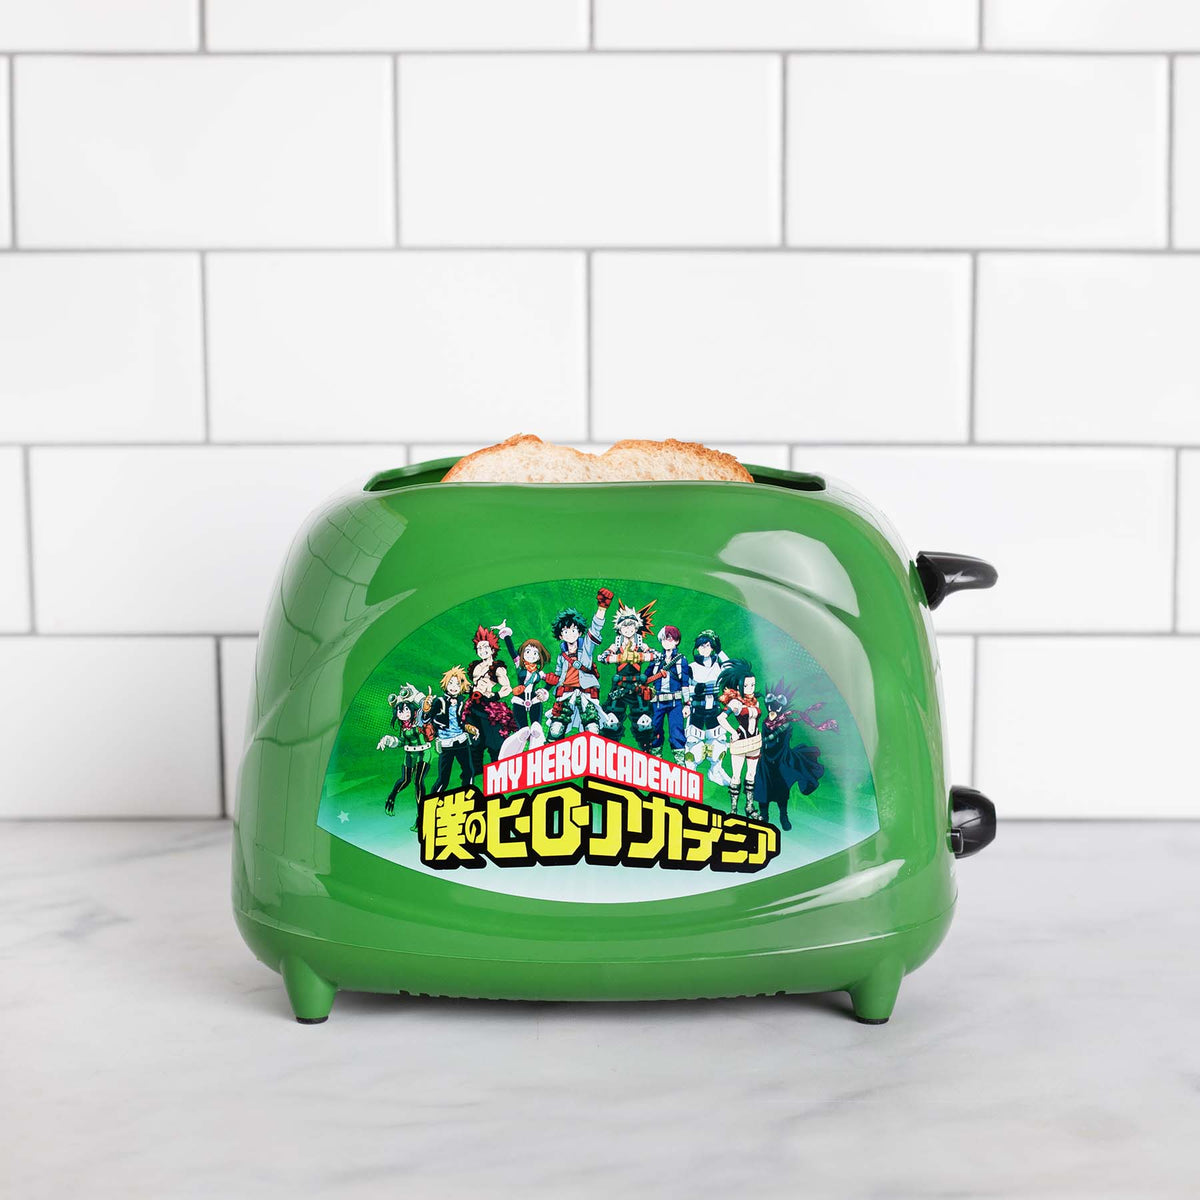 My Hero Academia Toaster